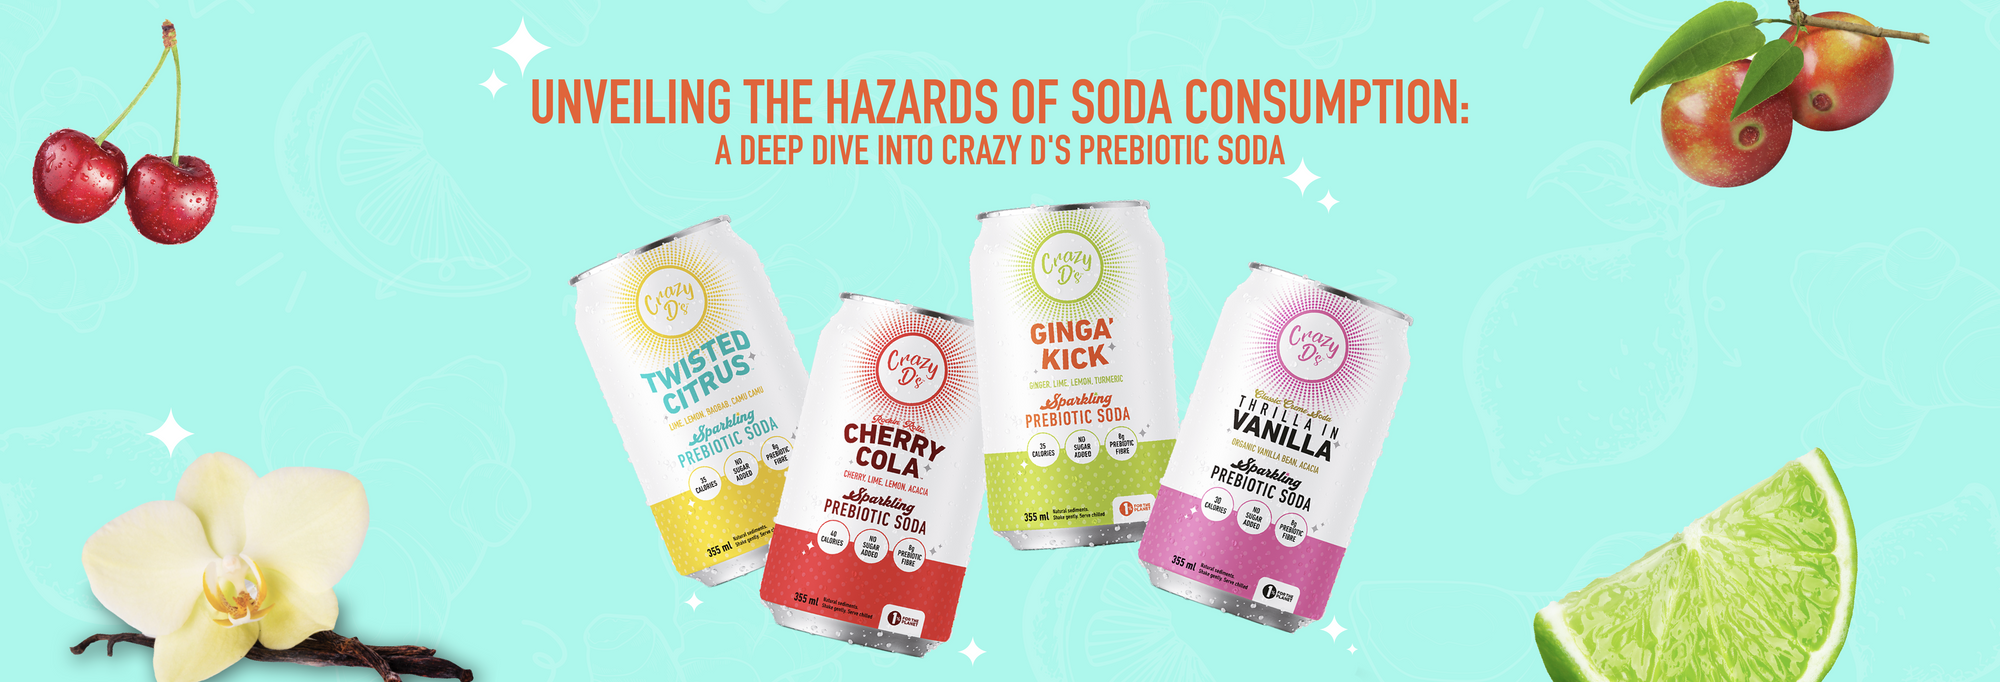 Unveiling the Hazards of Soda Consumption: A Deep Dive into Crazy D's Prebiotic Soda